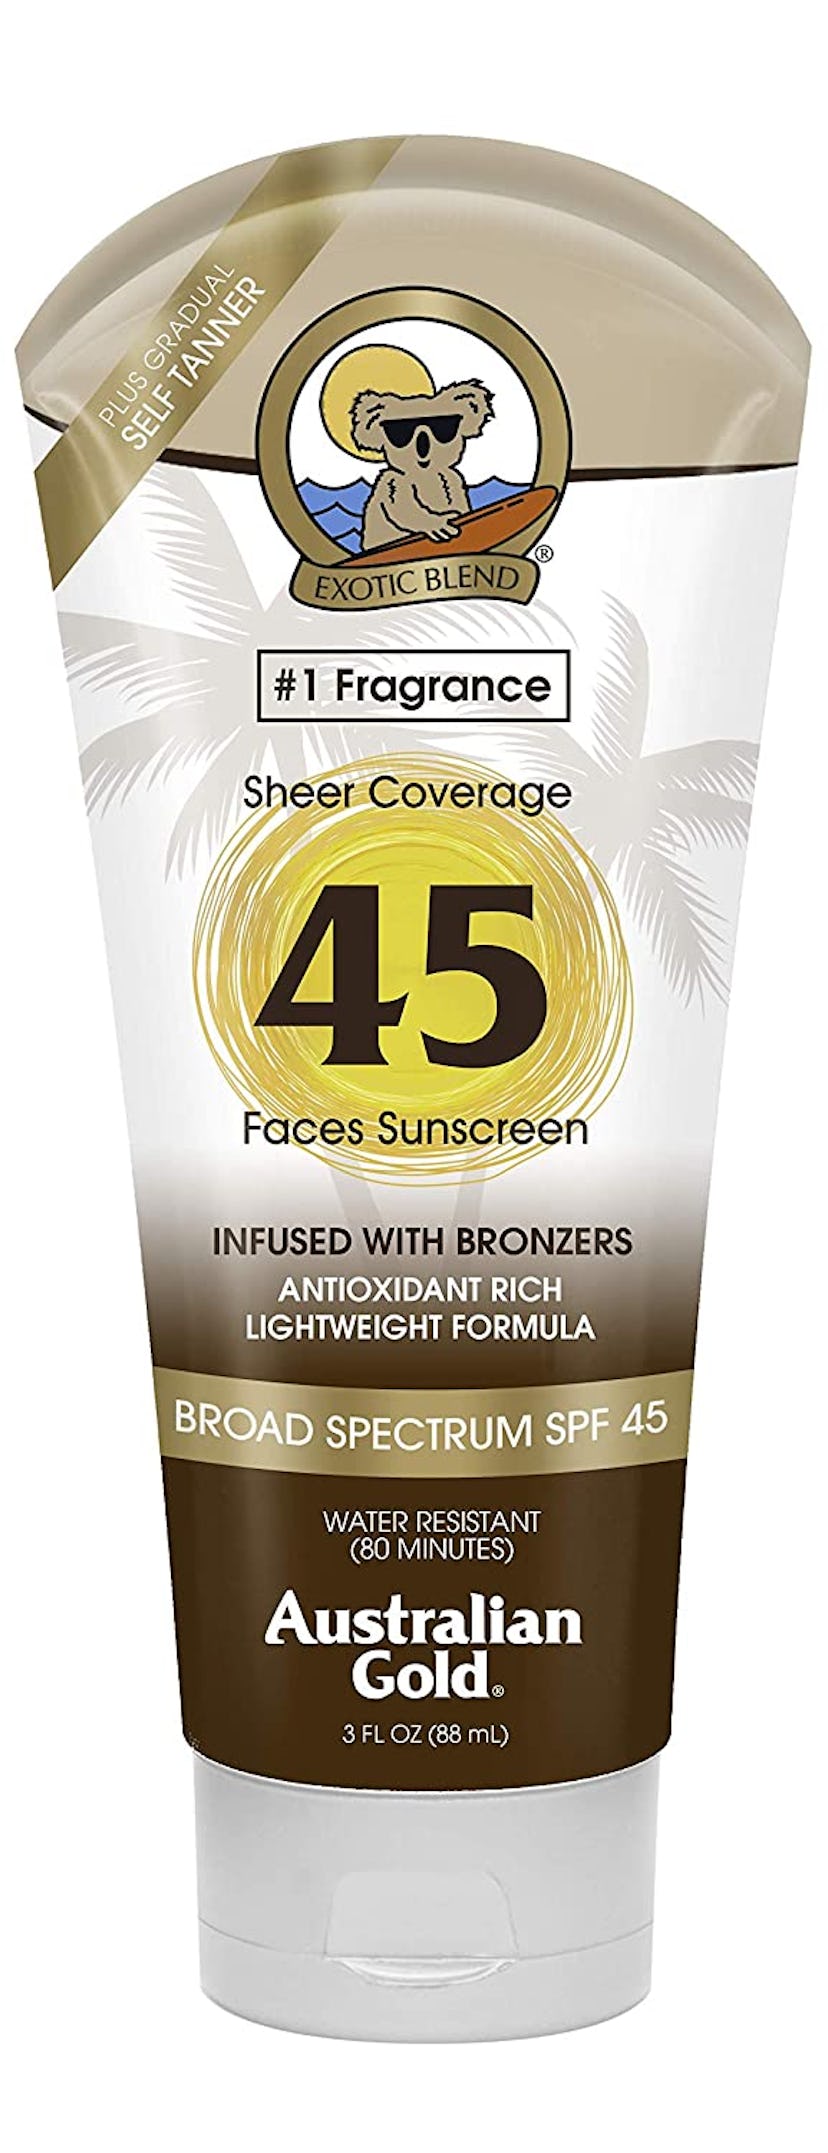 Australian Gold Premium Coverage Facial Sunscreen